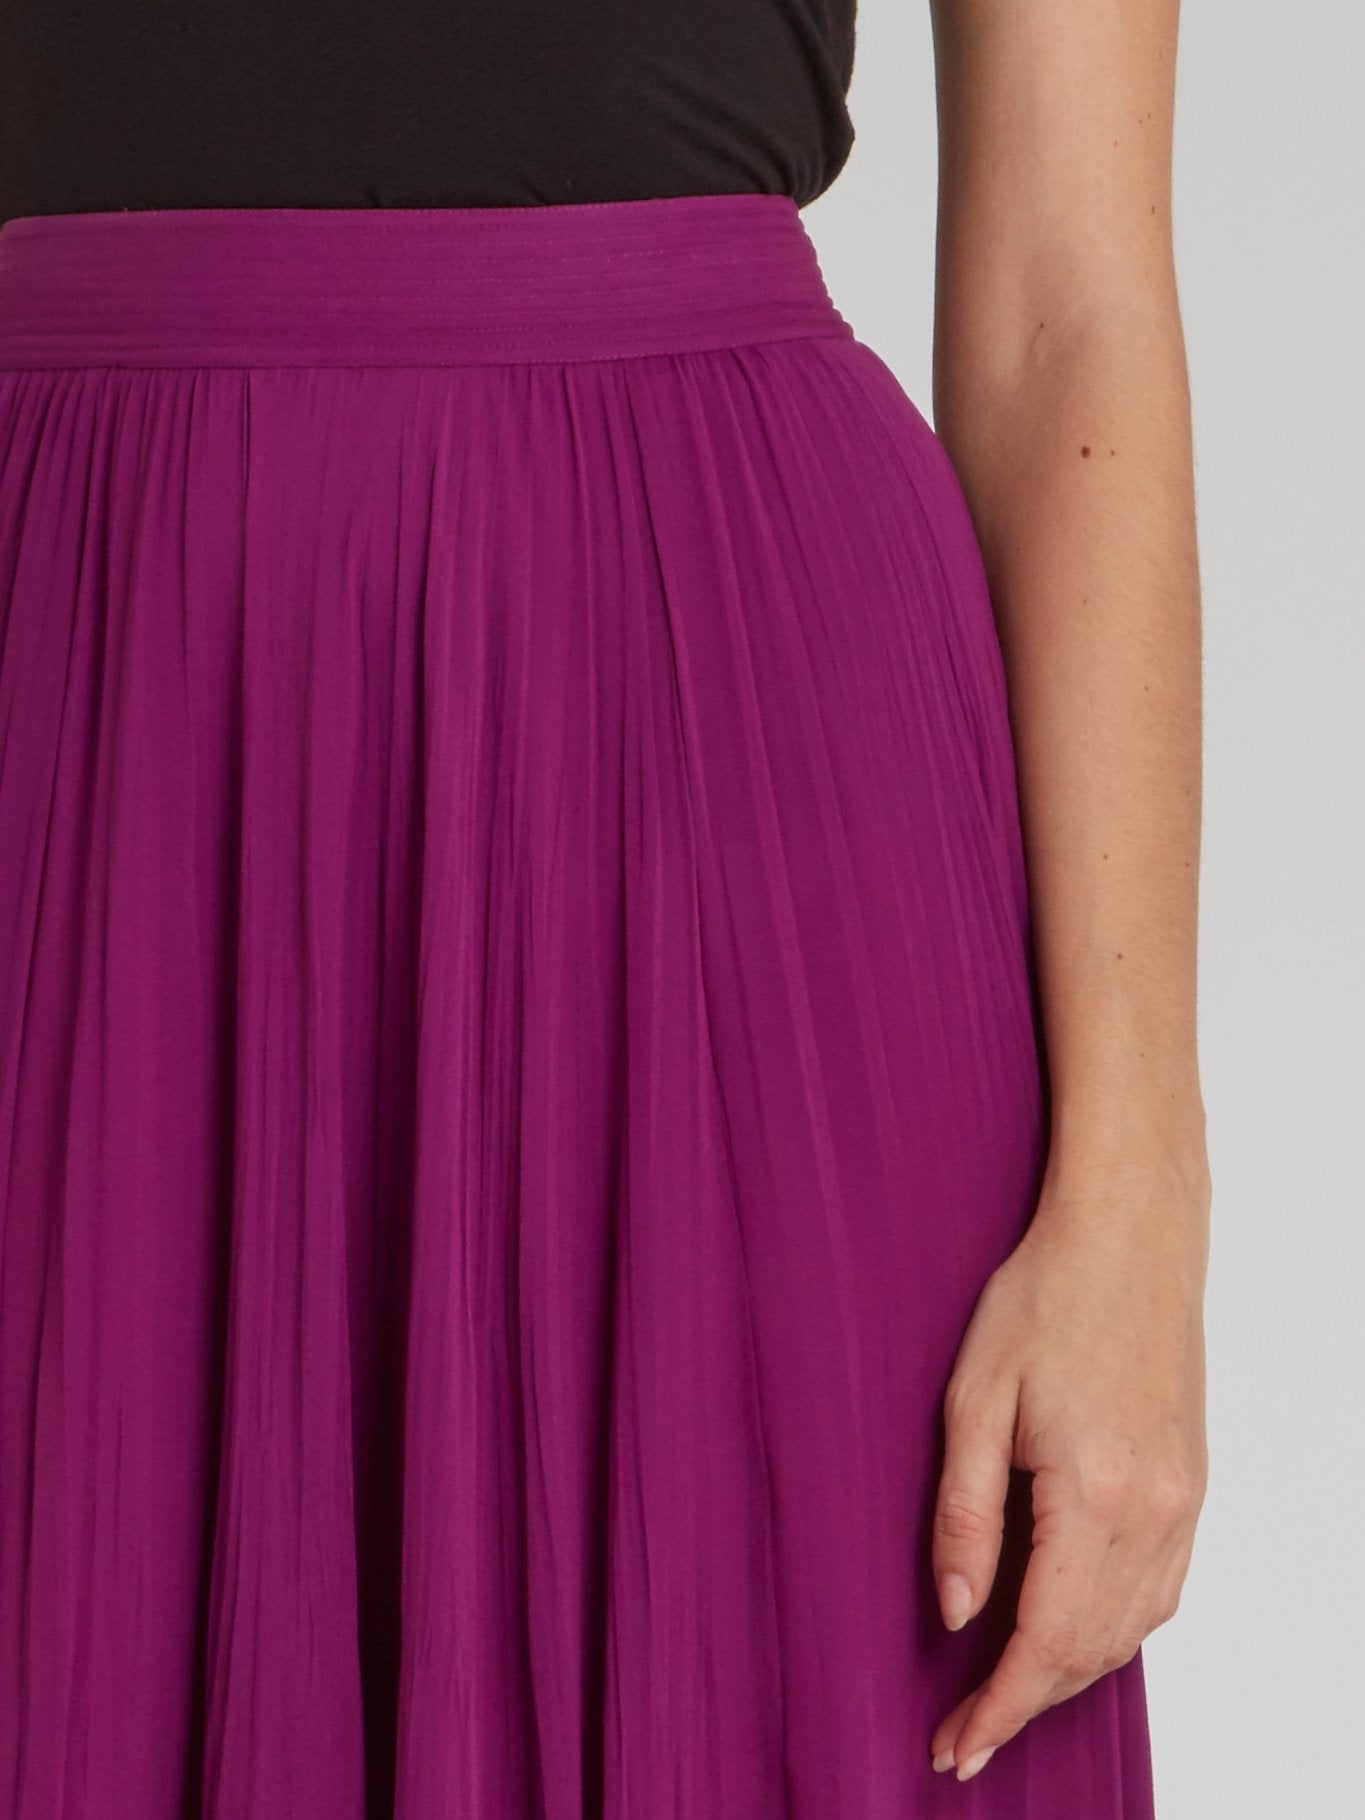 Eileen Fisher velvet maxi skirt Sumptuous plum... - Depop